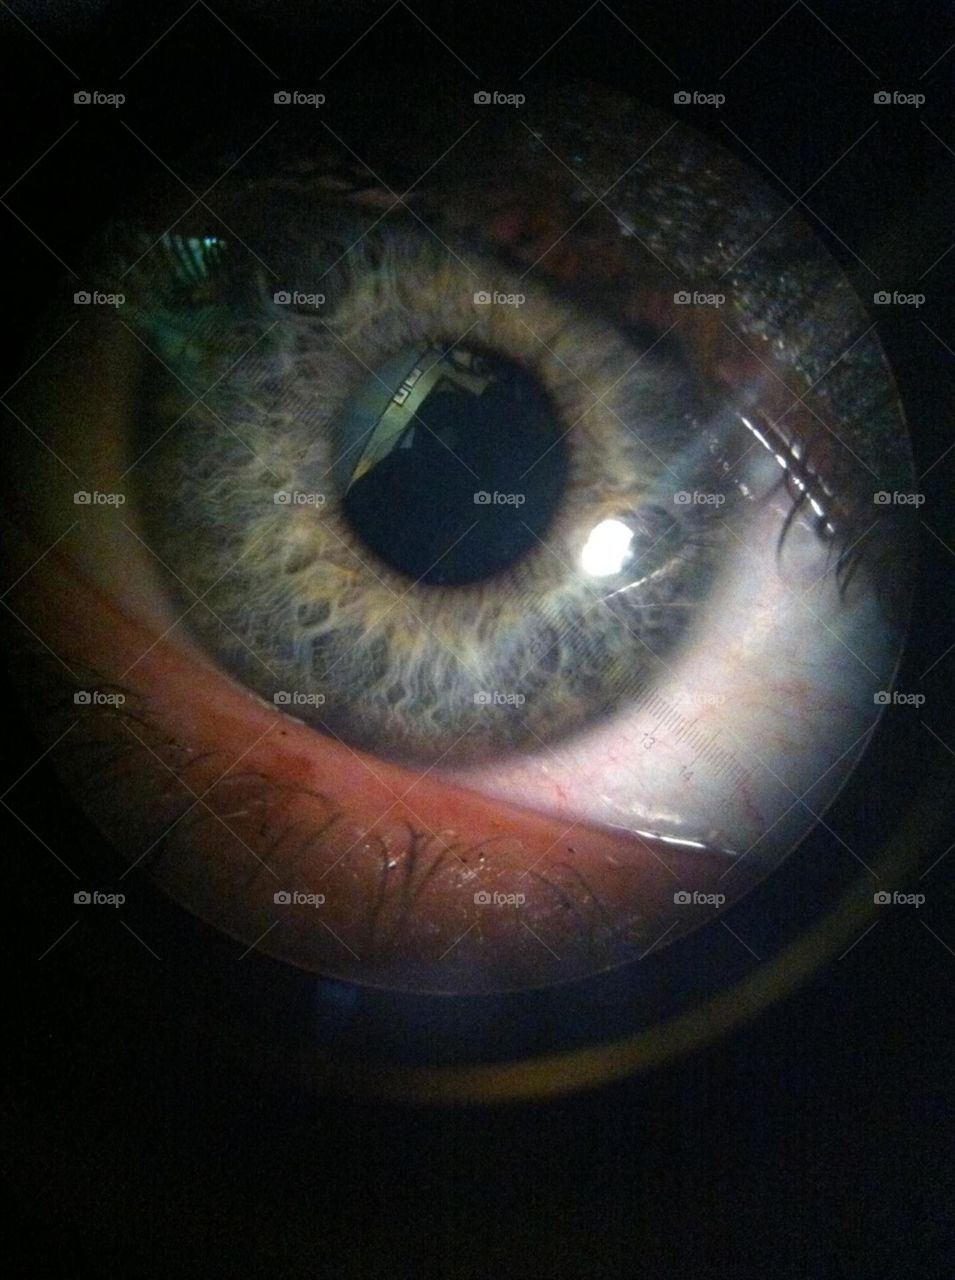 Iris. Very cool iris patterns from an ophthalmologist slit lamp camera